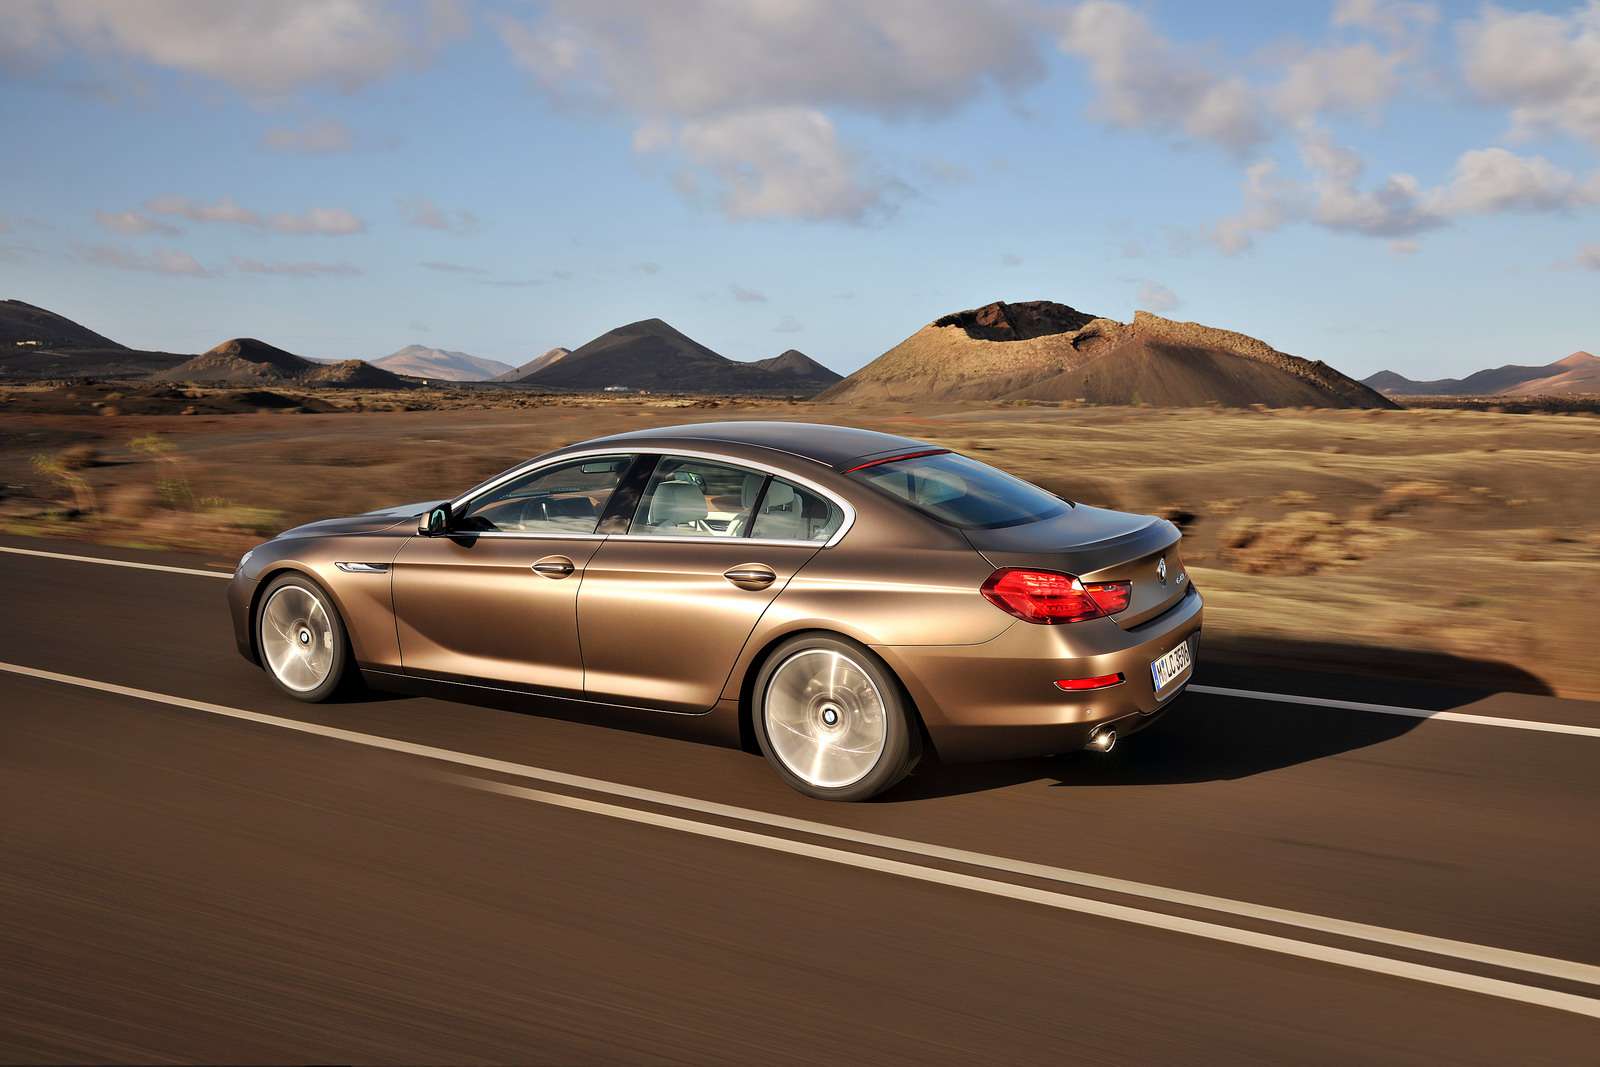 BMW 6 Gran Coupe fot oficjalnie grudzien 2011